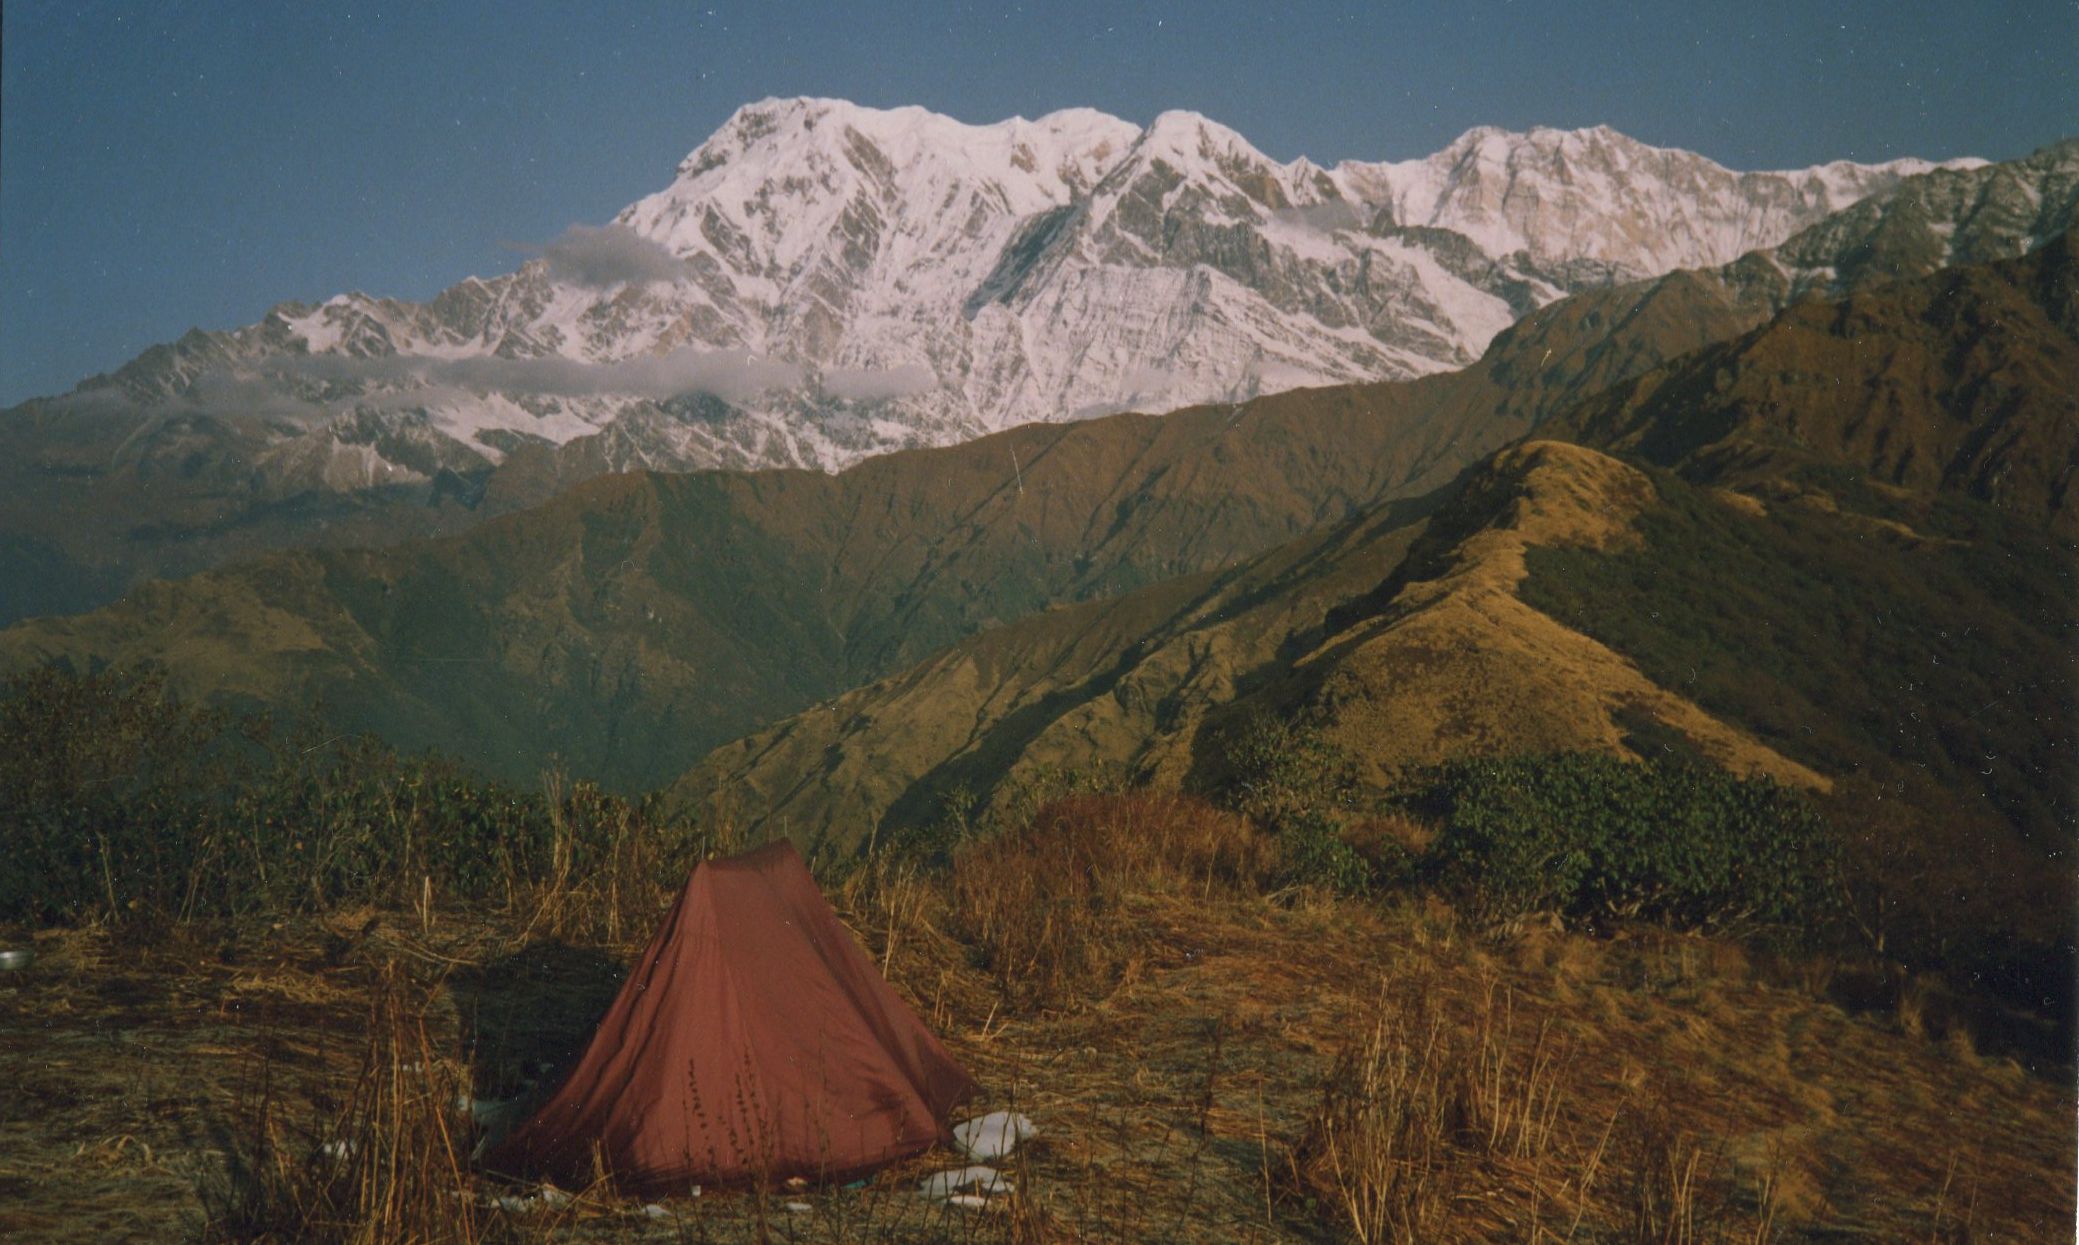 Annapurna South and Annapurna I from camp at Khorchon